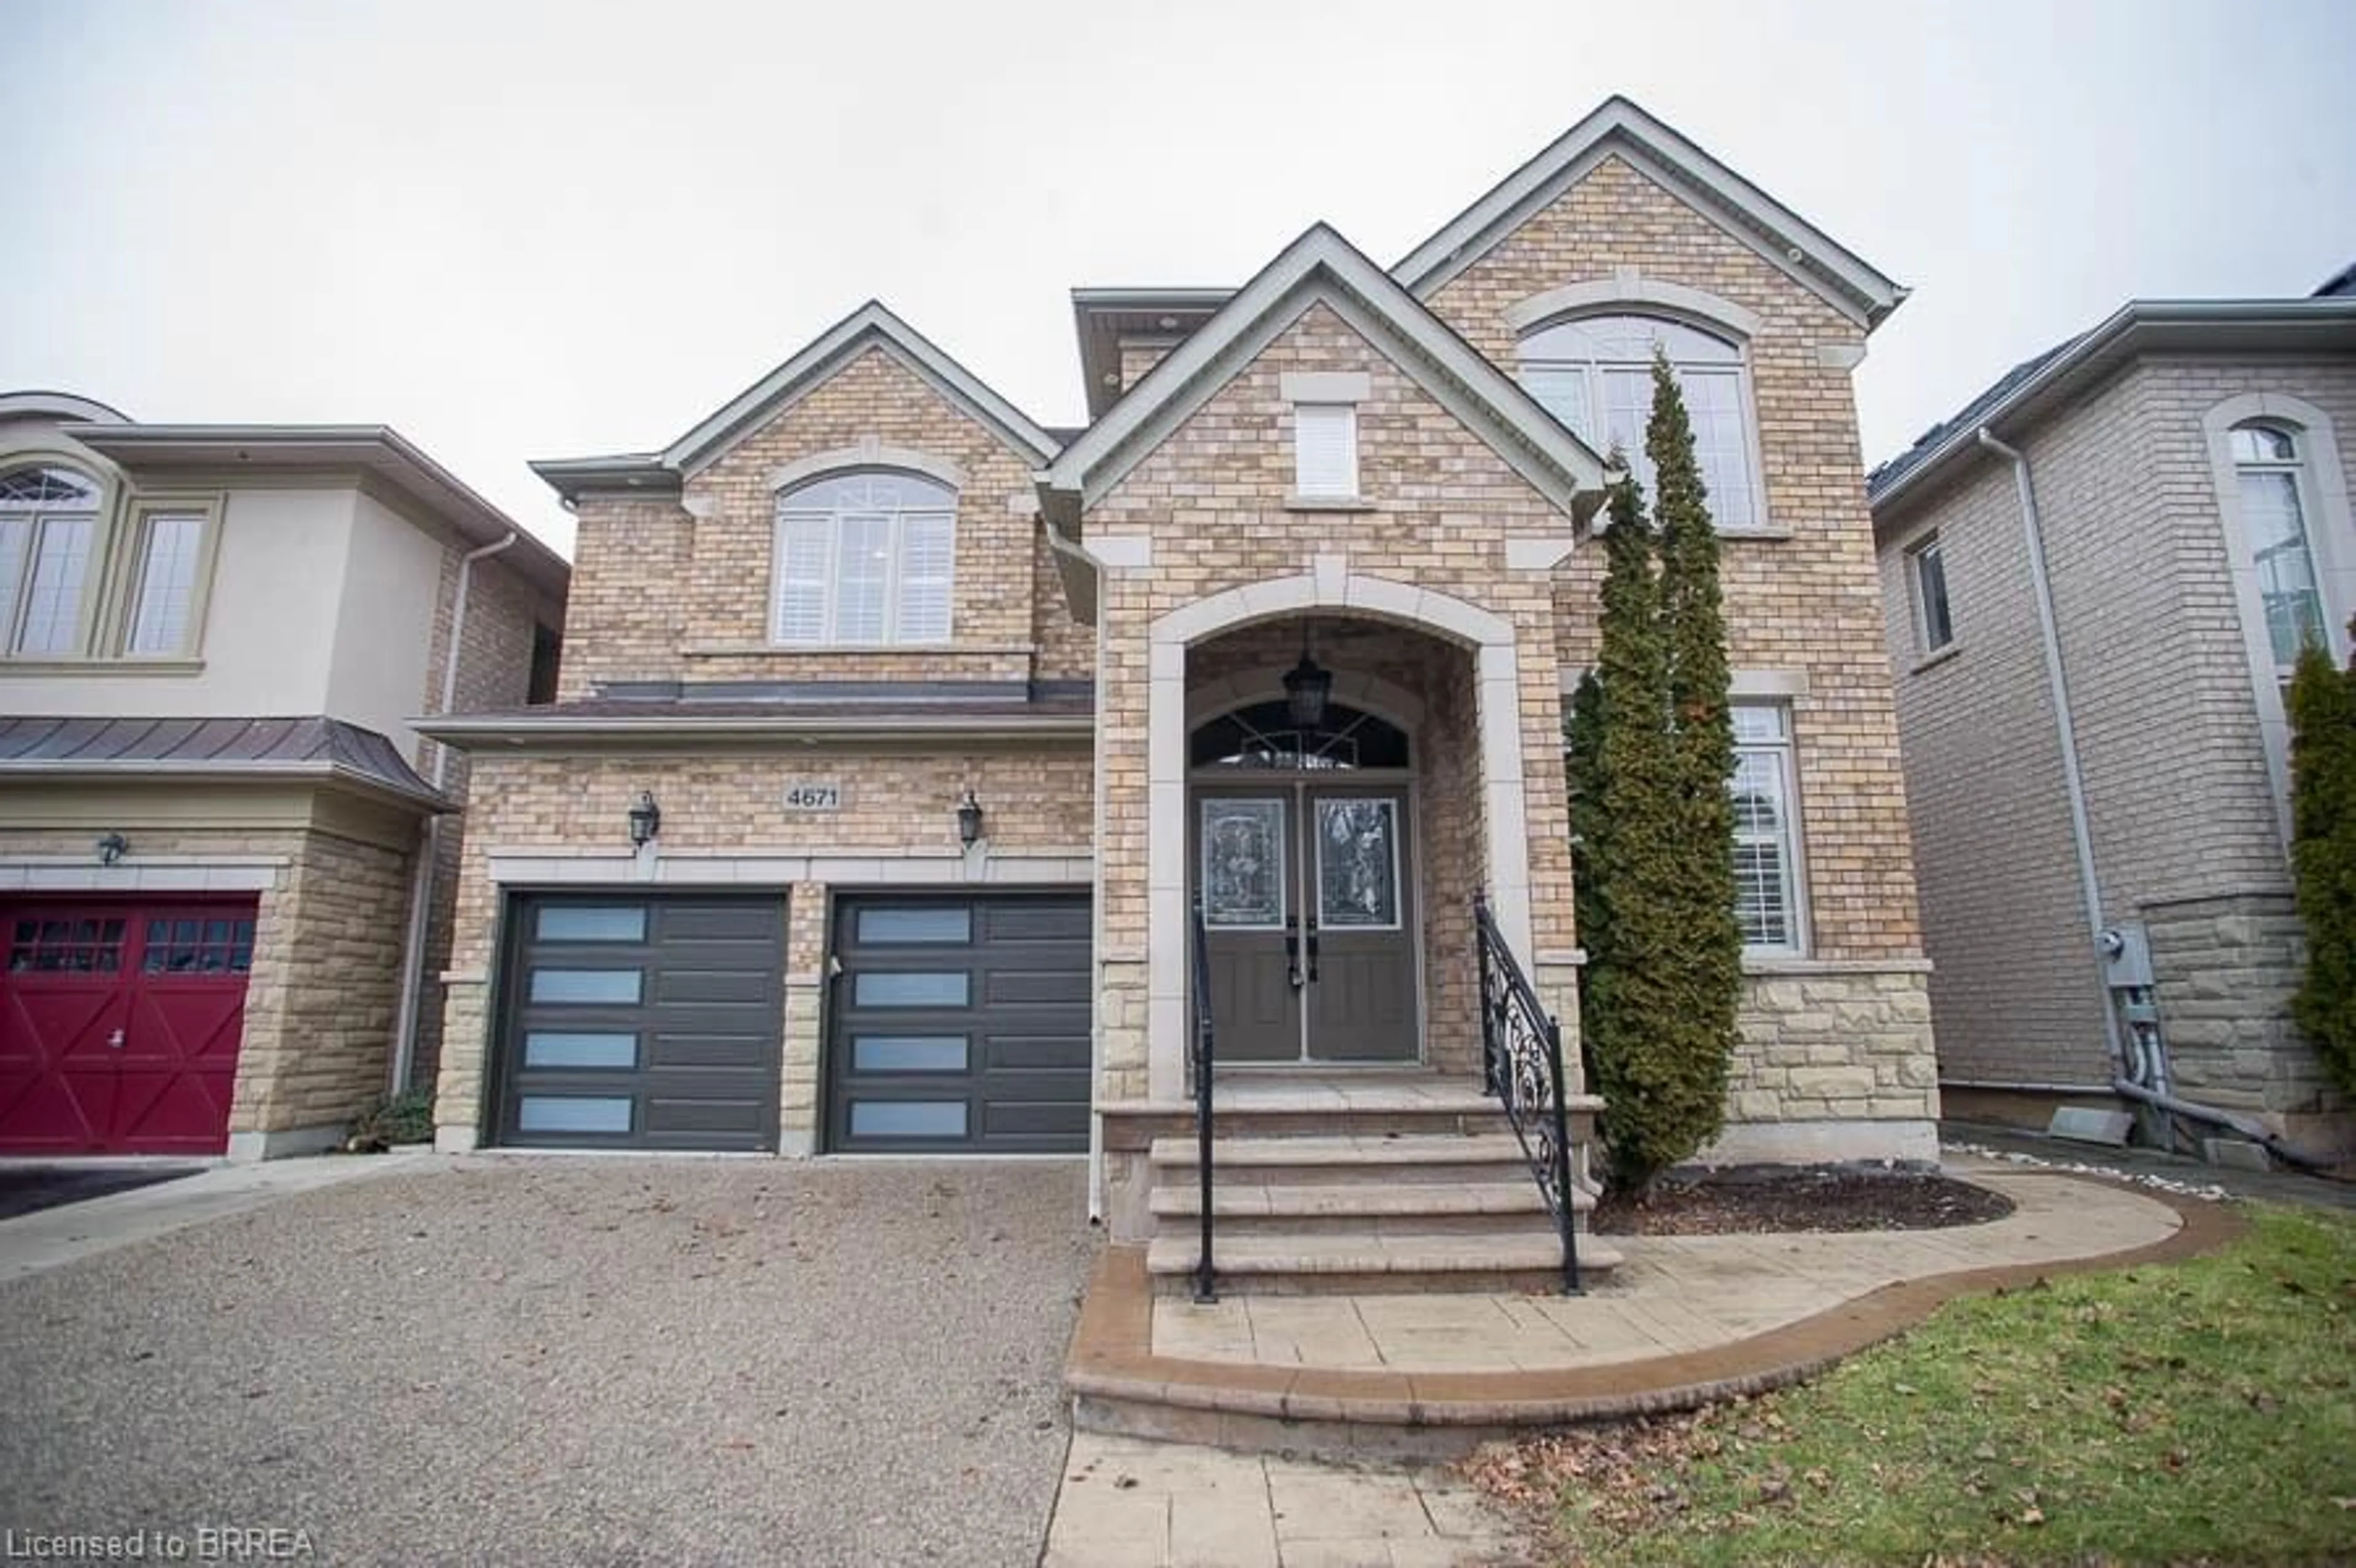 Home with brick exterior material for 4671 Mcleod Rd, Burlington Ontario L7M 0E4